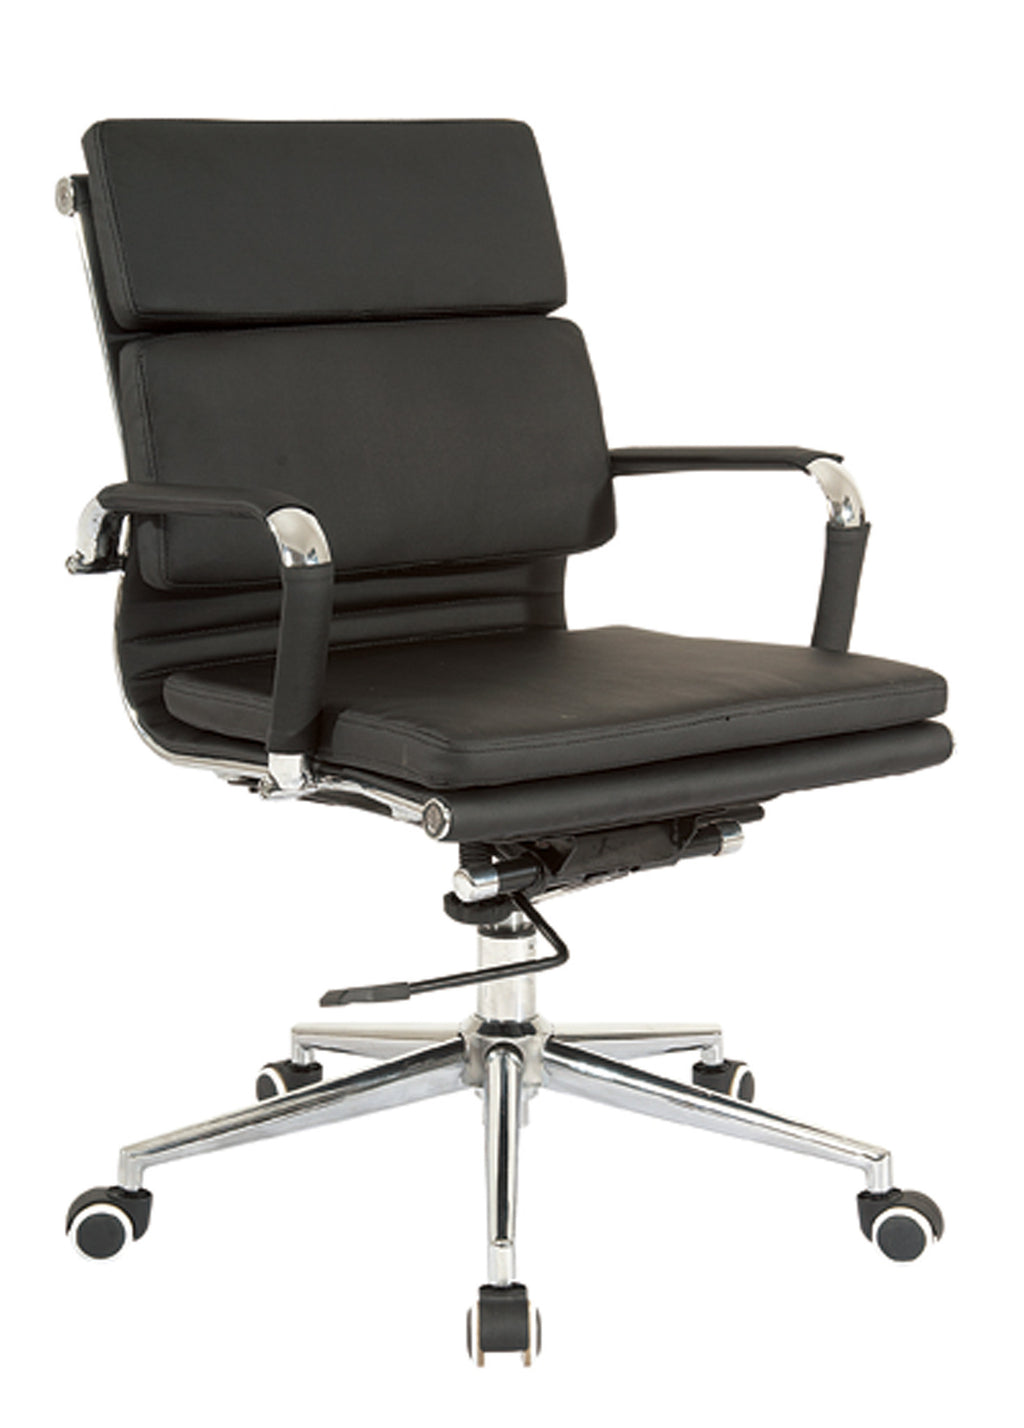 Padded high density office chair, medium back desk chair, computer office chair, swivel chair, leather black chair